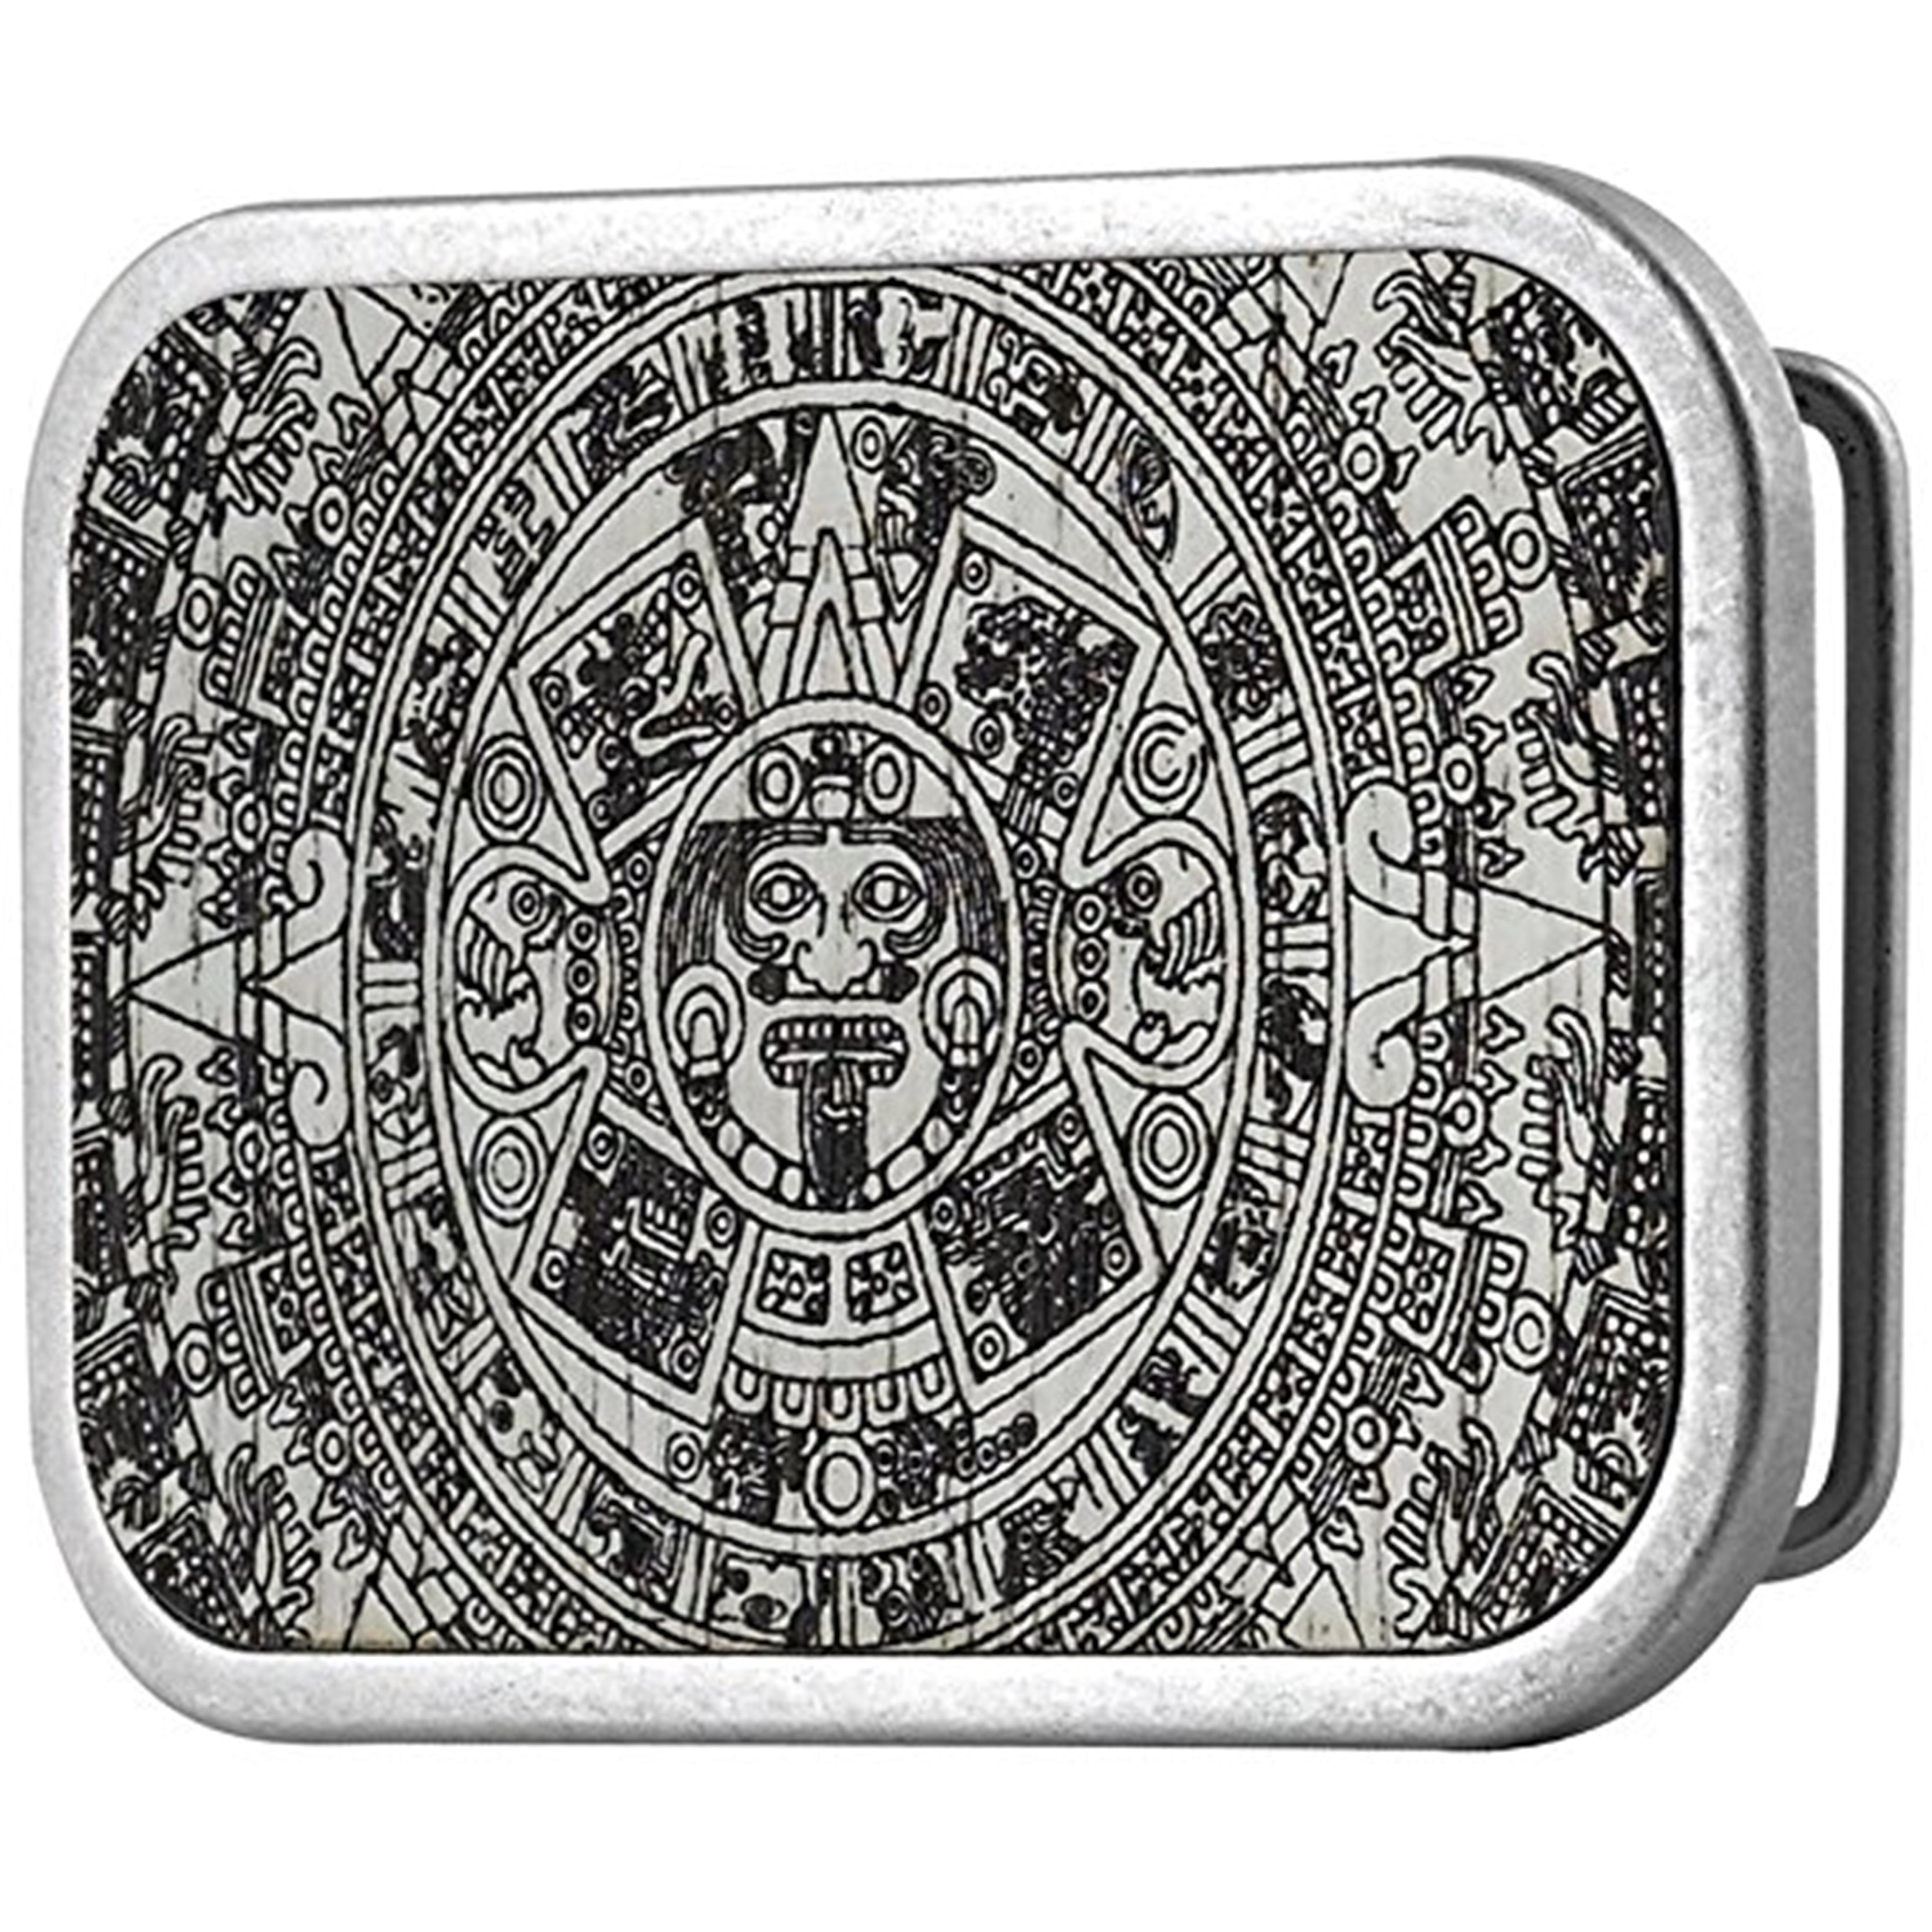 Aztec Azteca Calendar Belt Buckle Silver Metal Western Rock Star Style ...